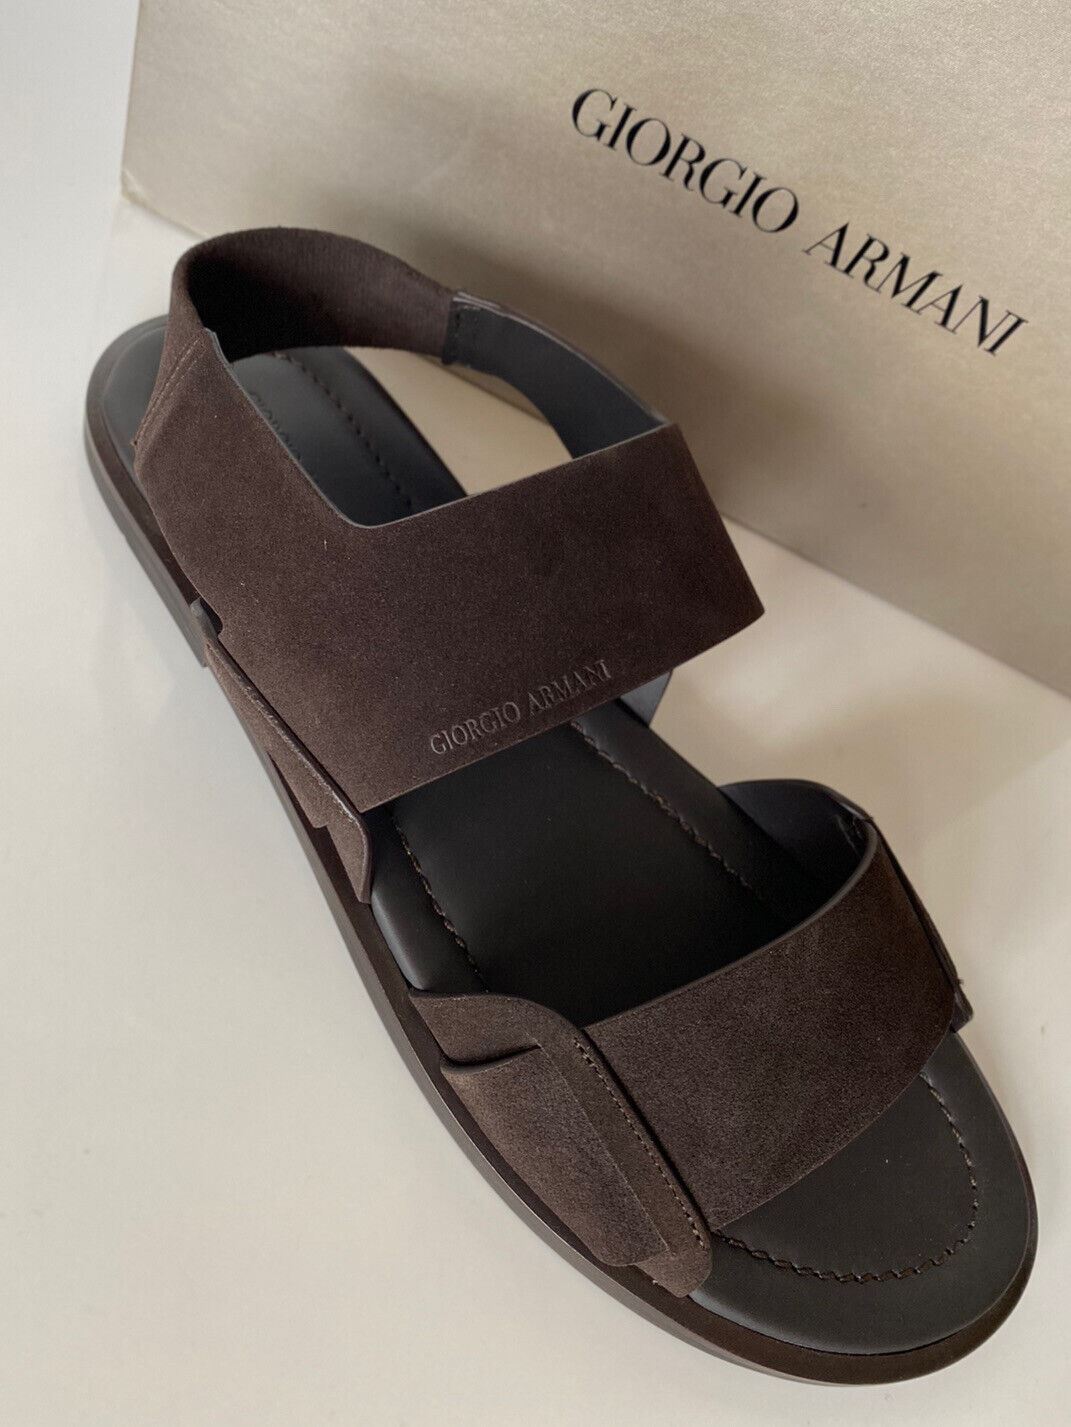 NIB $625 Giorgio Armani Brown Suede/Leather Ankle Strap Sandals 11 US X2P064 IT